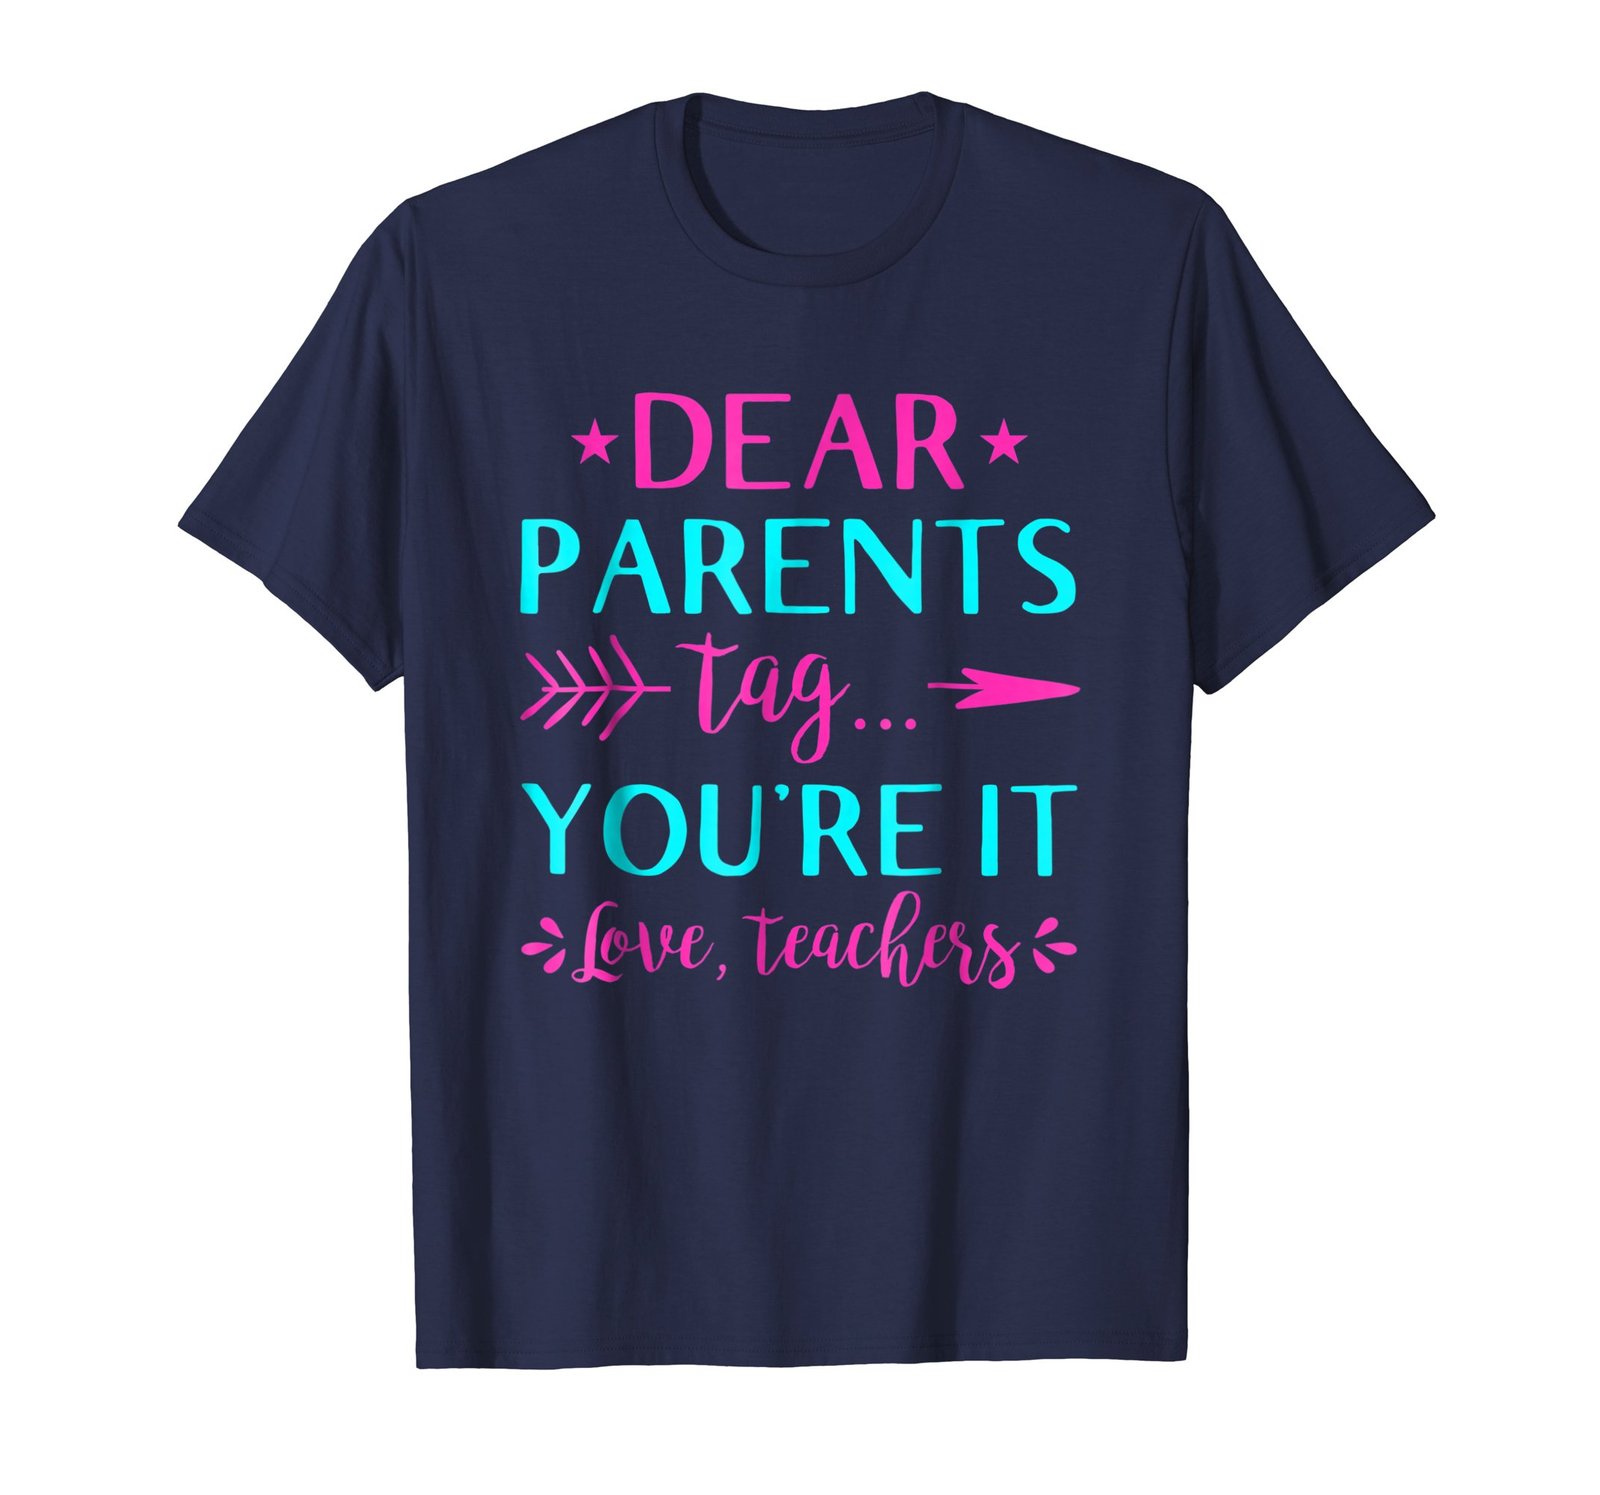 Funny Shirts - Dear Parents Tag You're It Love Teacher Funny T-Shirt Men